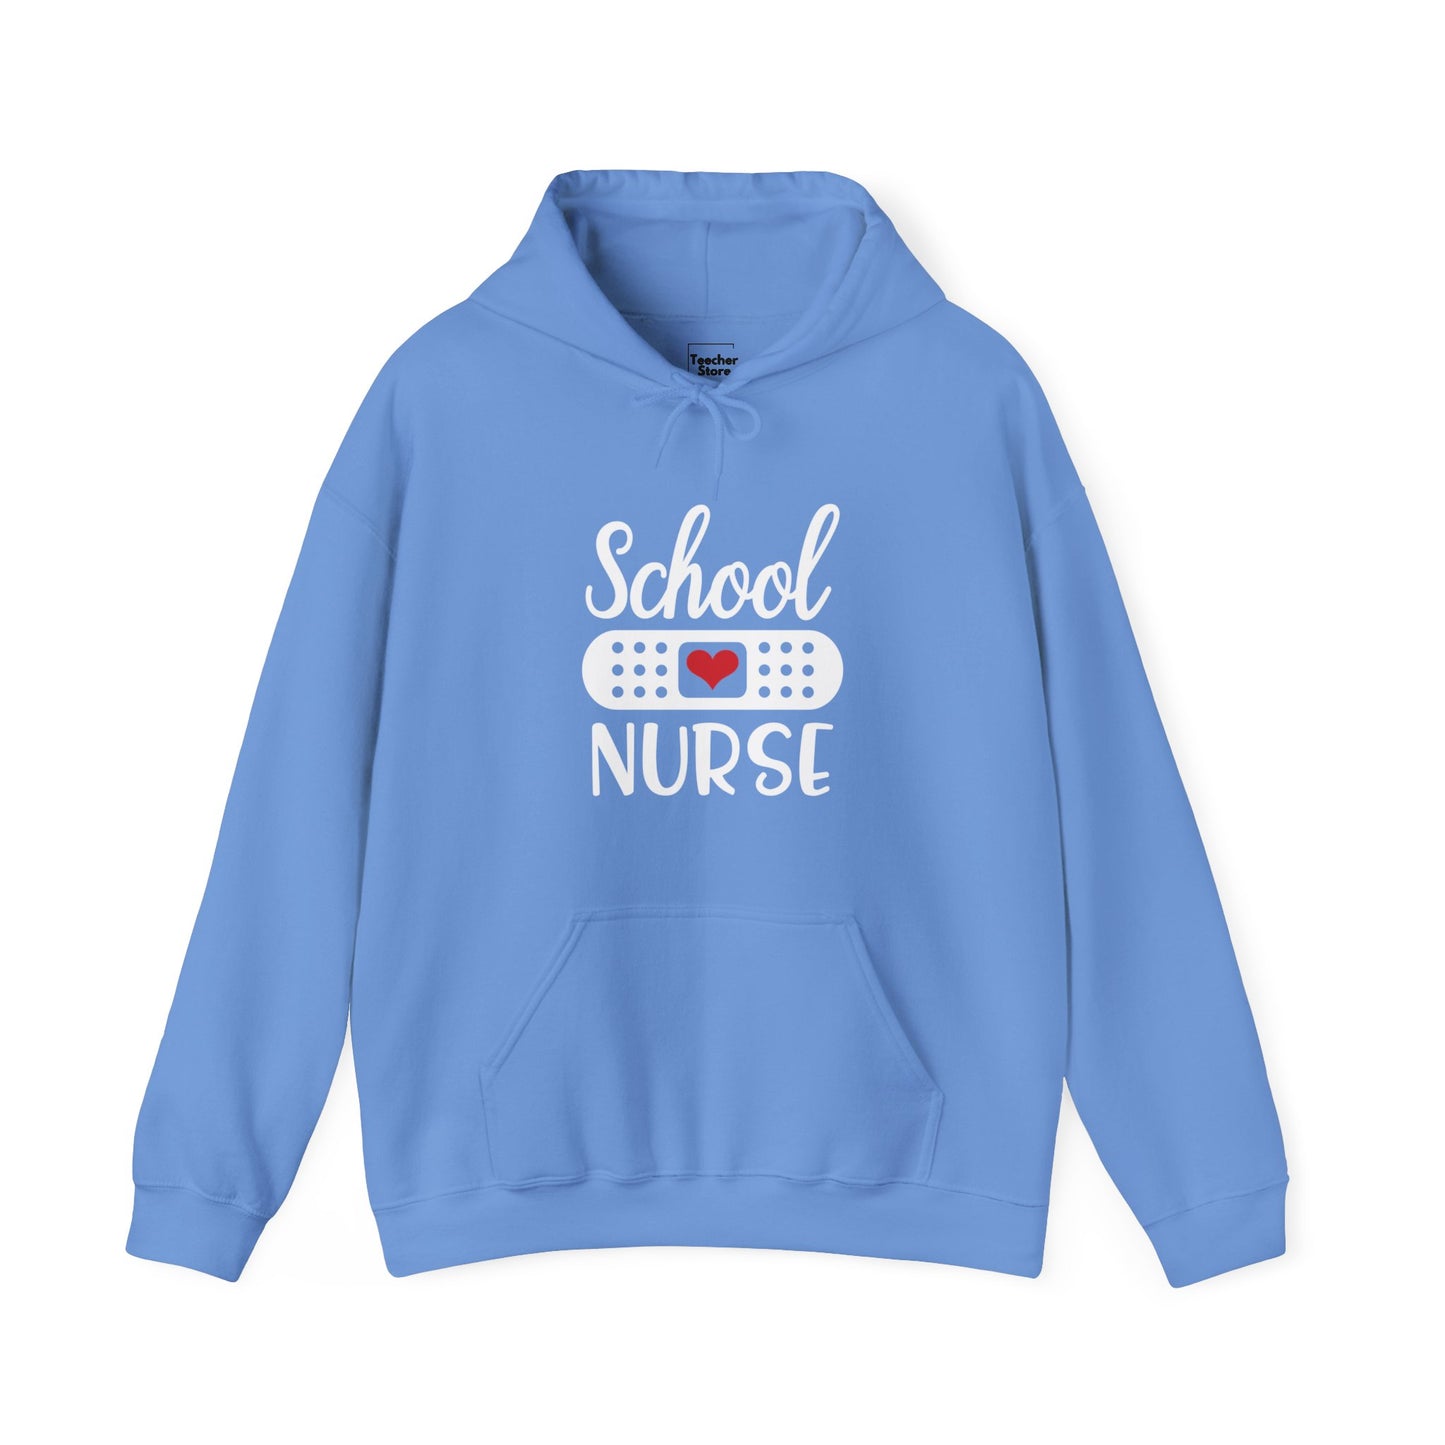 School Nurse Hooded Sweatshirt